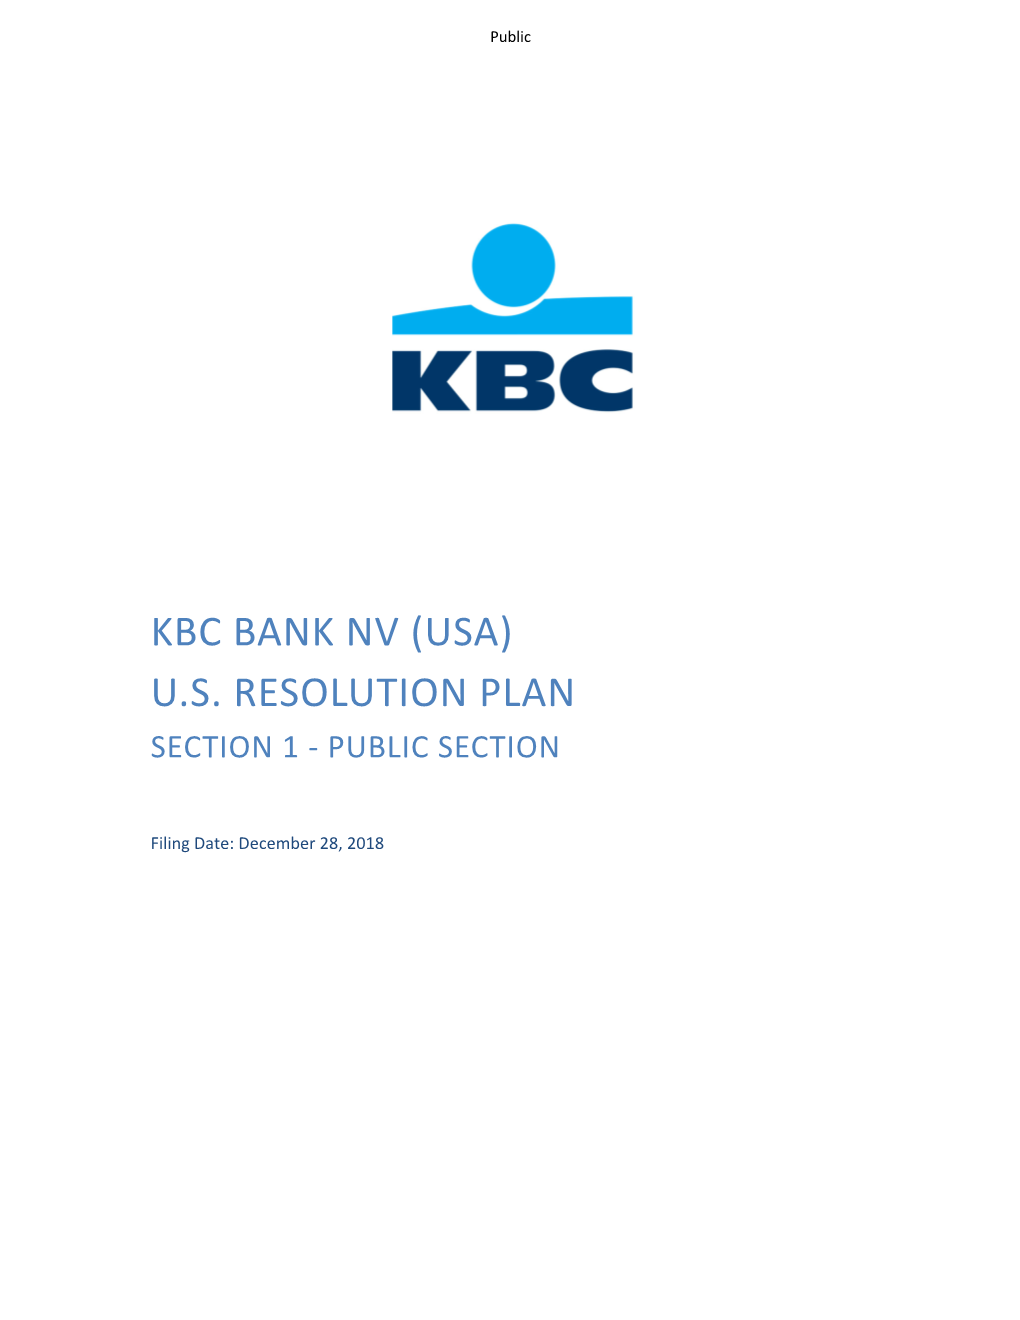 Kbc Bank Nv (Usa) U.S. Resolution Plan Section 1 - Public Section